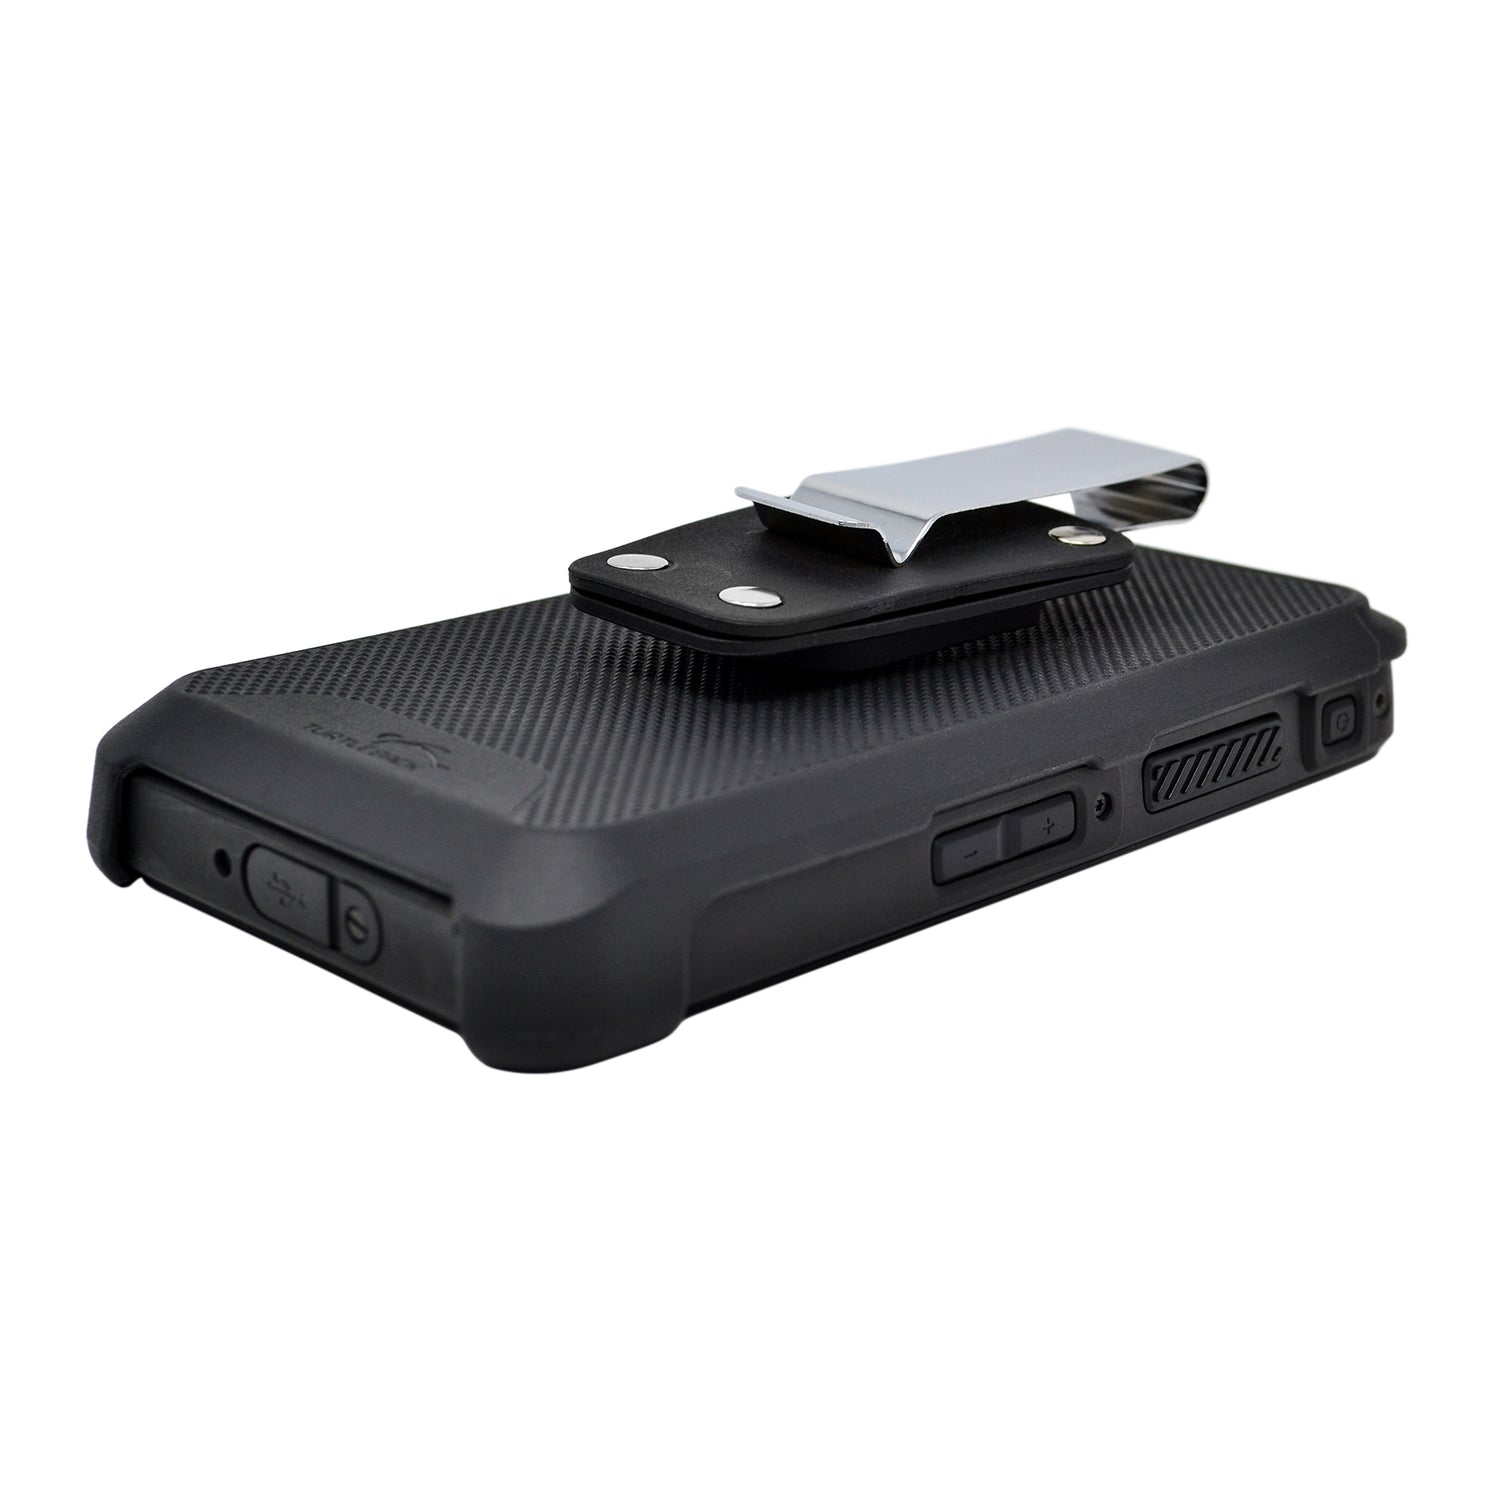 Turtleback Balastec™ plastic holster with 3 year warranty for Sonim phones. 